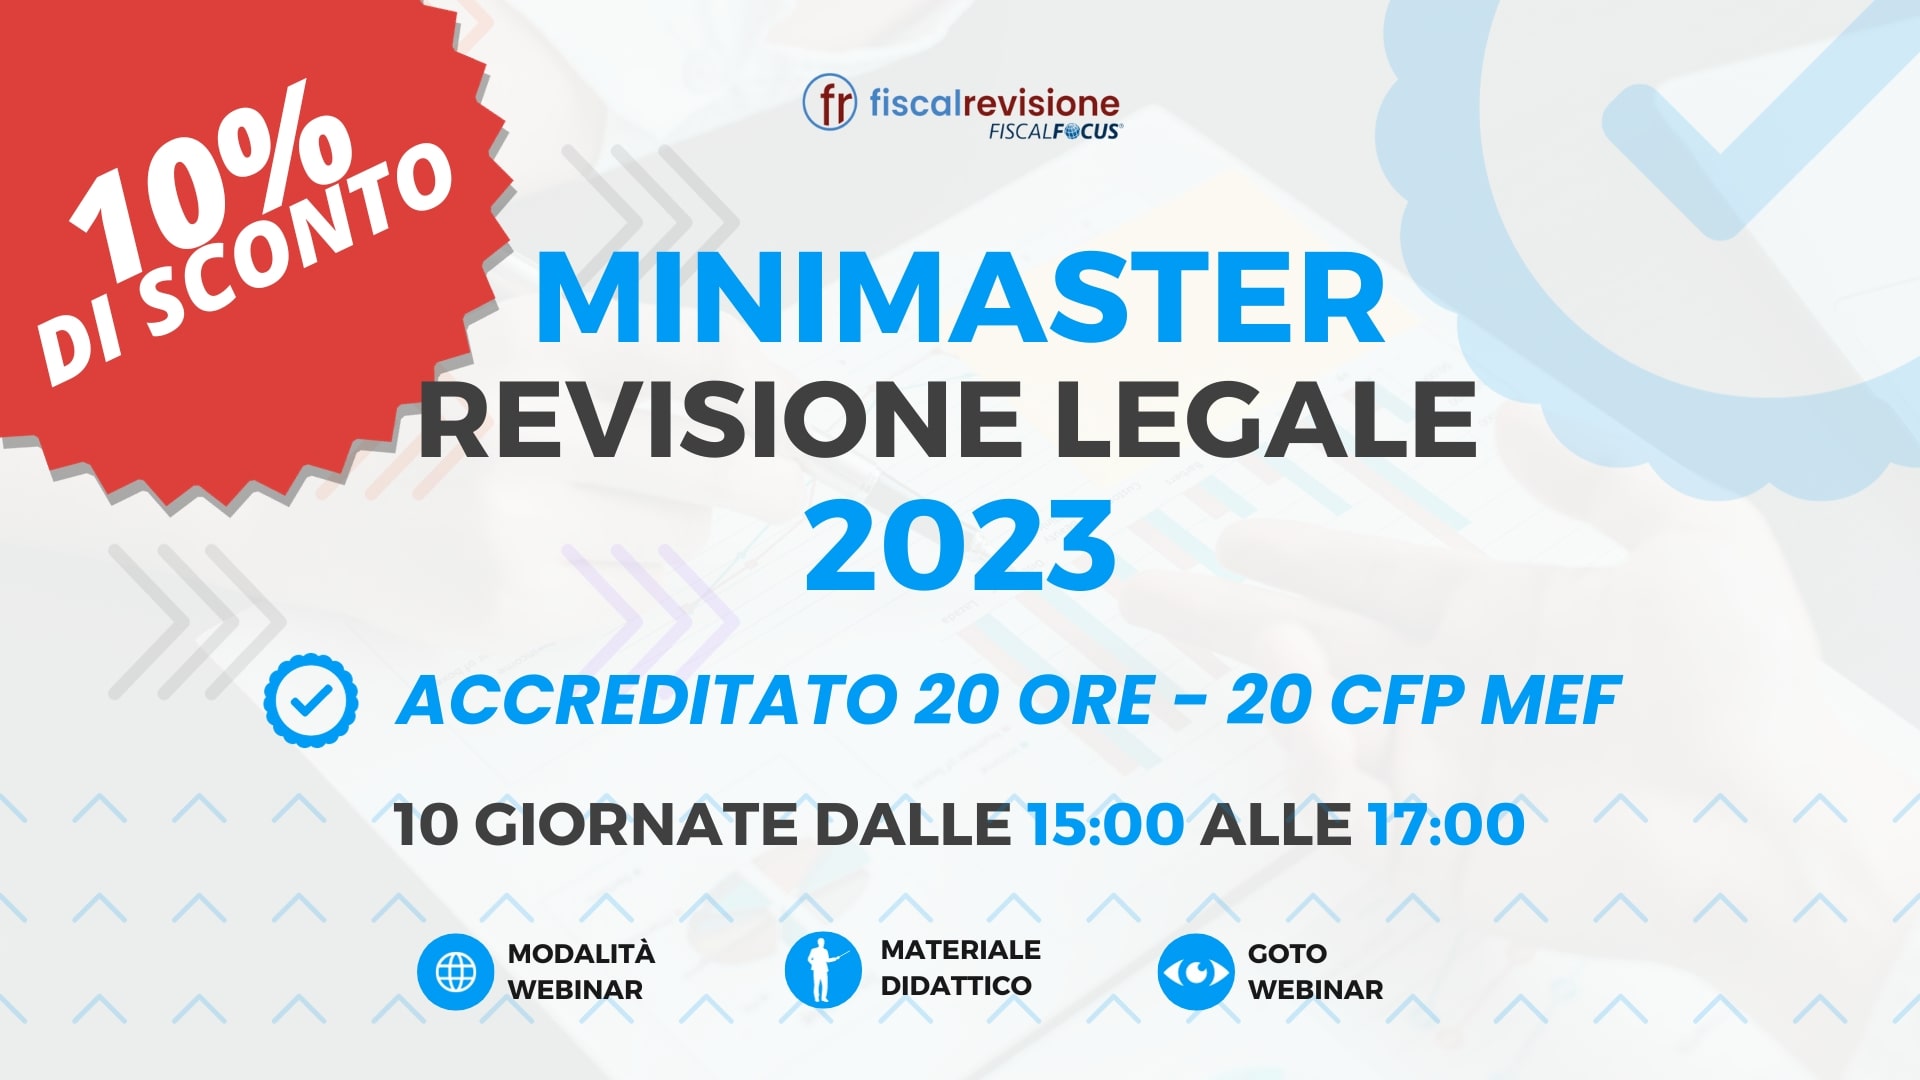 Minimaster Revisore Legale 2023 - 20 ORE 20 CFP